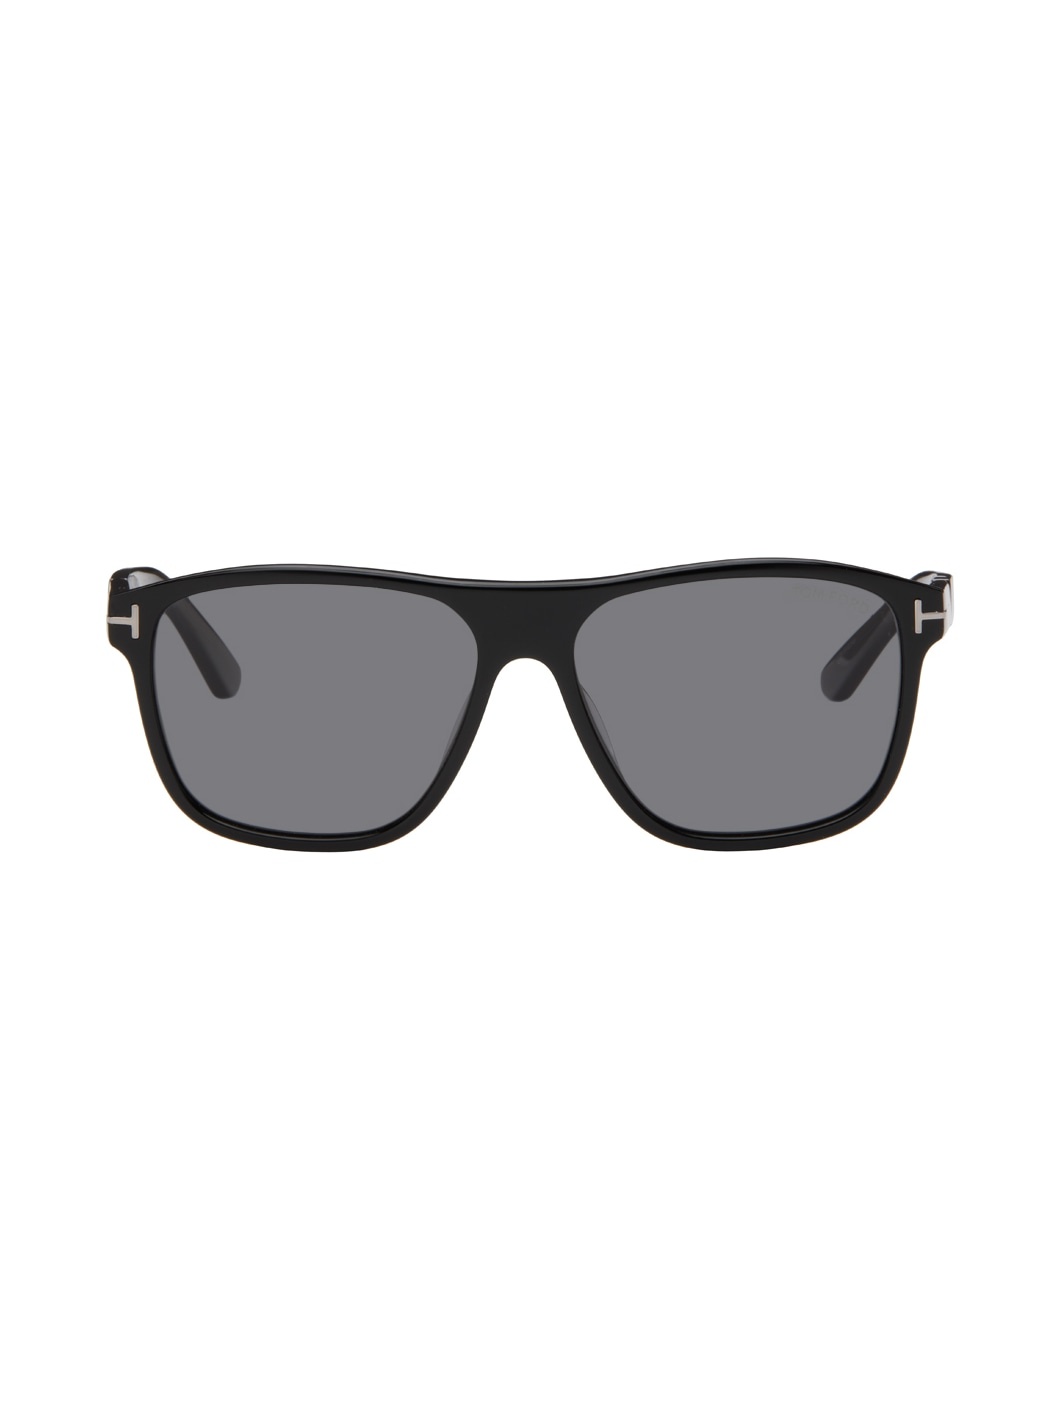 Black Frances Sunglasses - 1